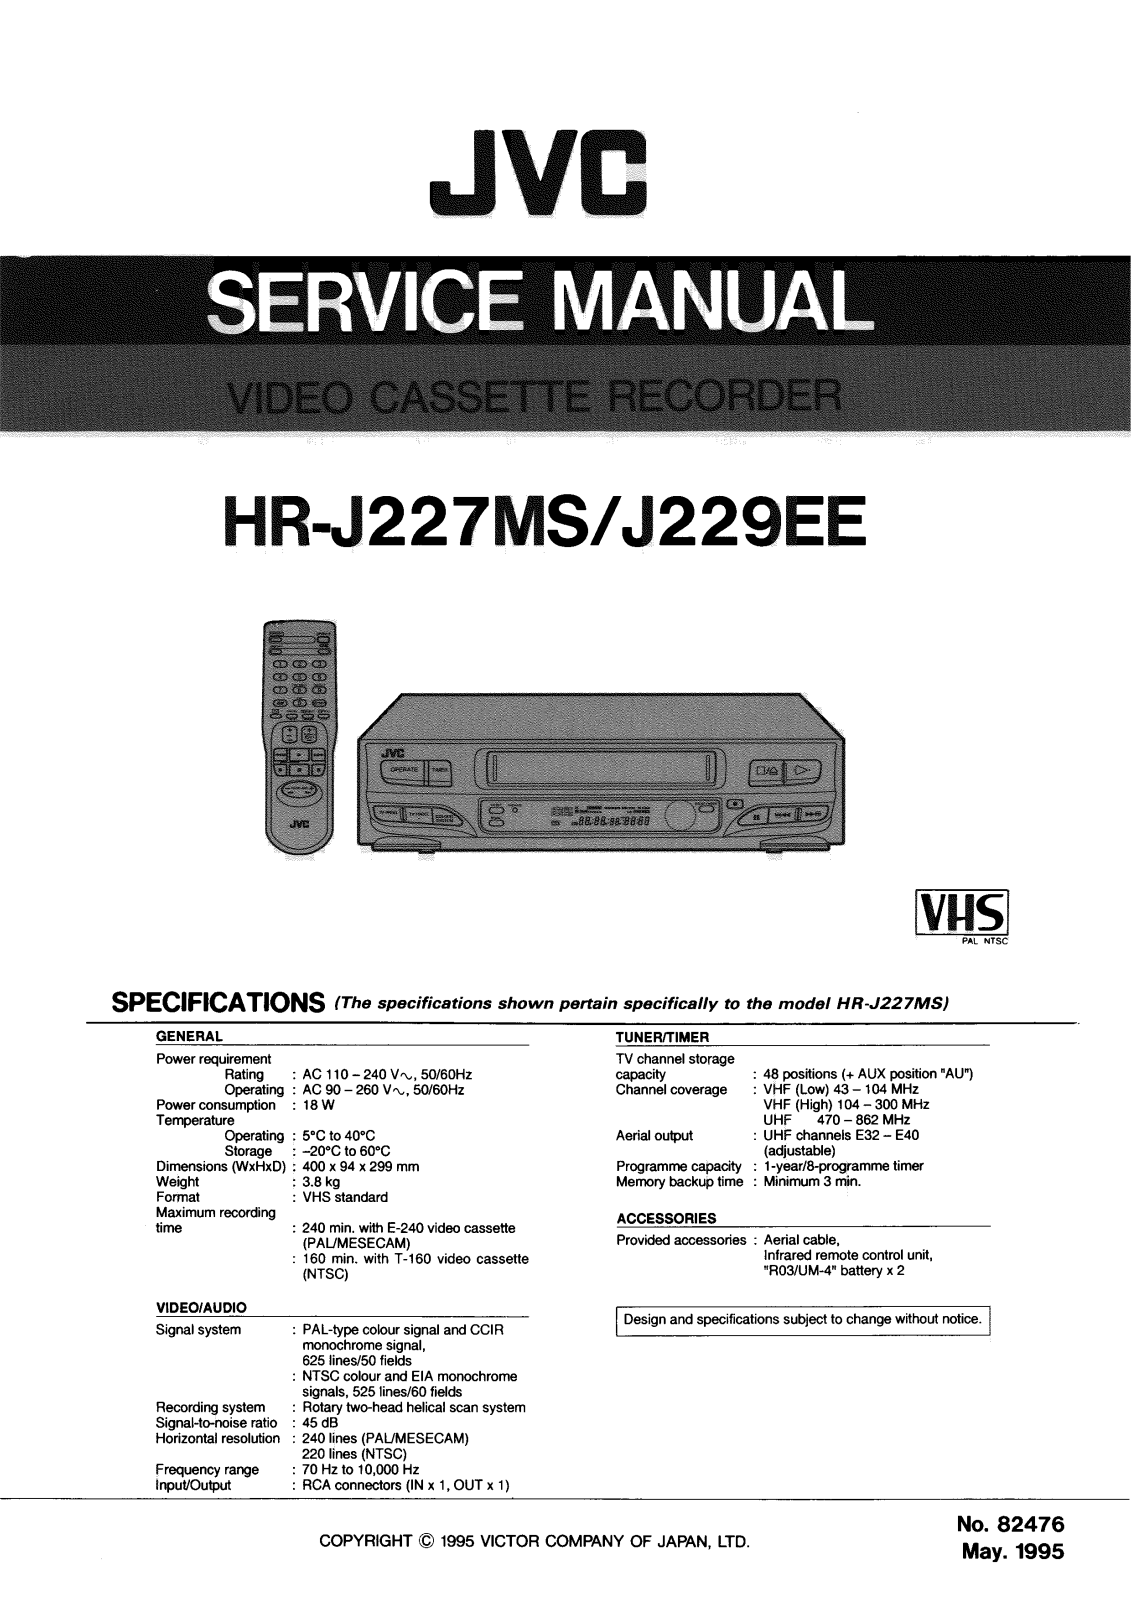 JVC HR-J227MS, HR-J229EE Service Manual